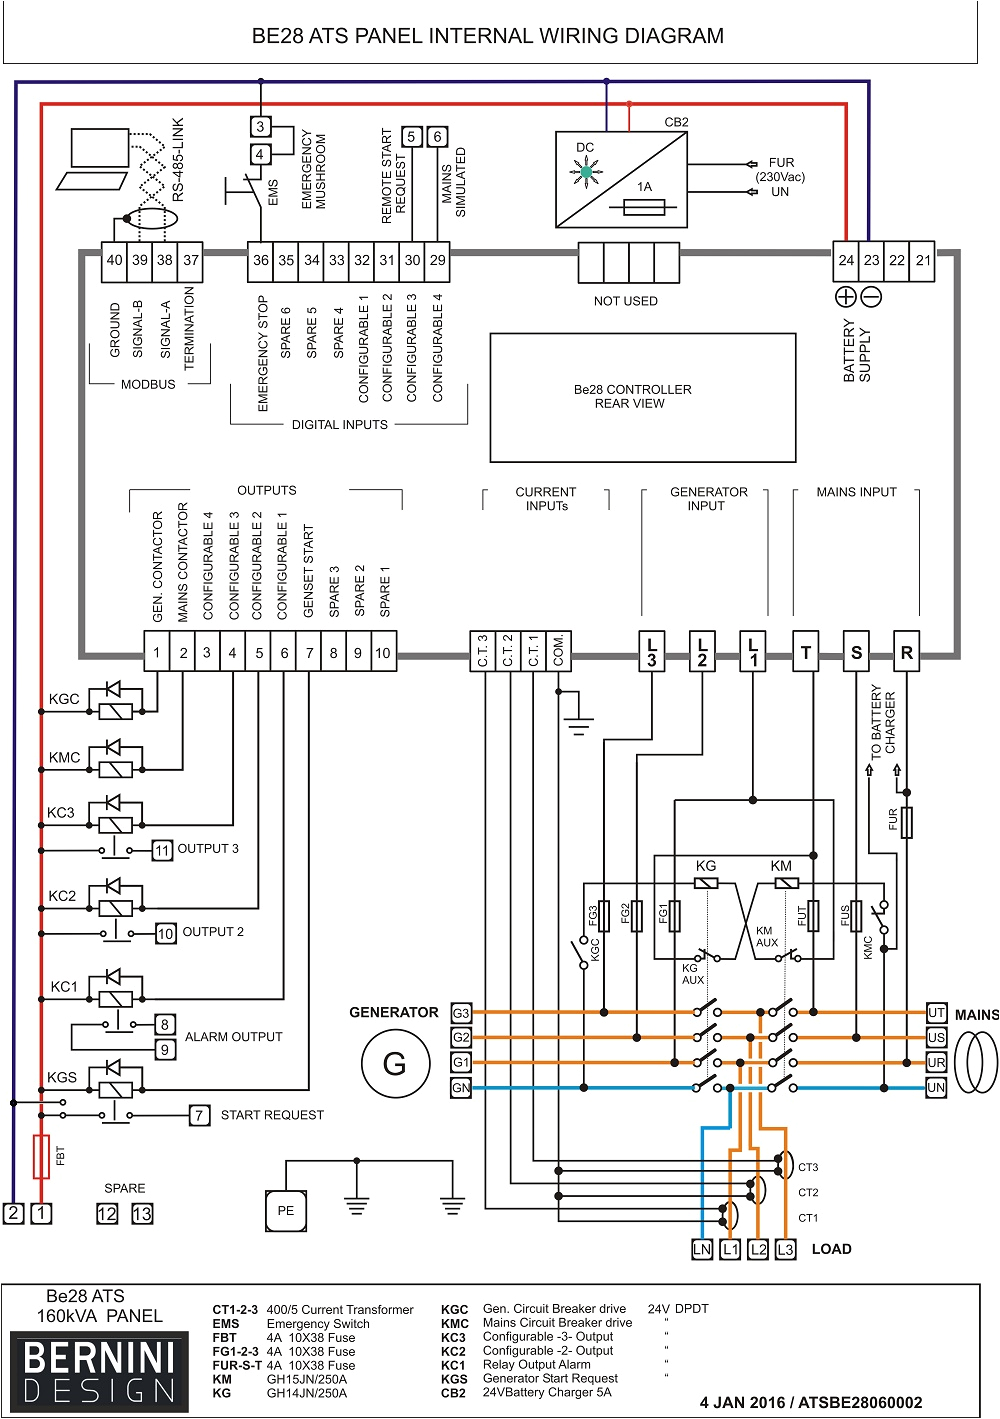 generator control panel wiring diagram home wiring diagram cat generator control panel wiring diagram generator control panel wiring diagram